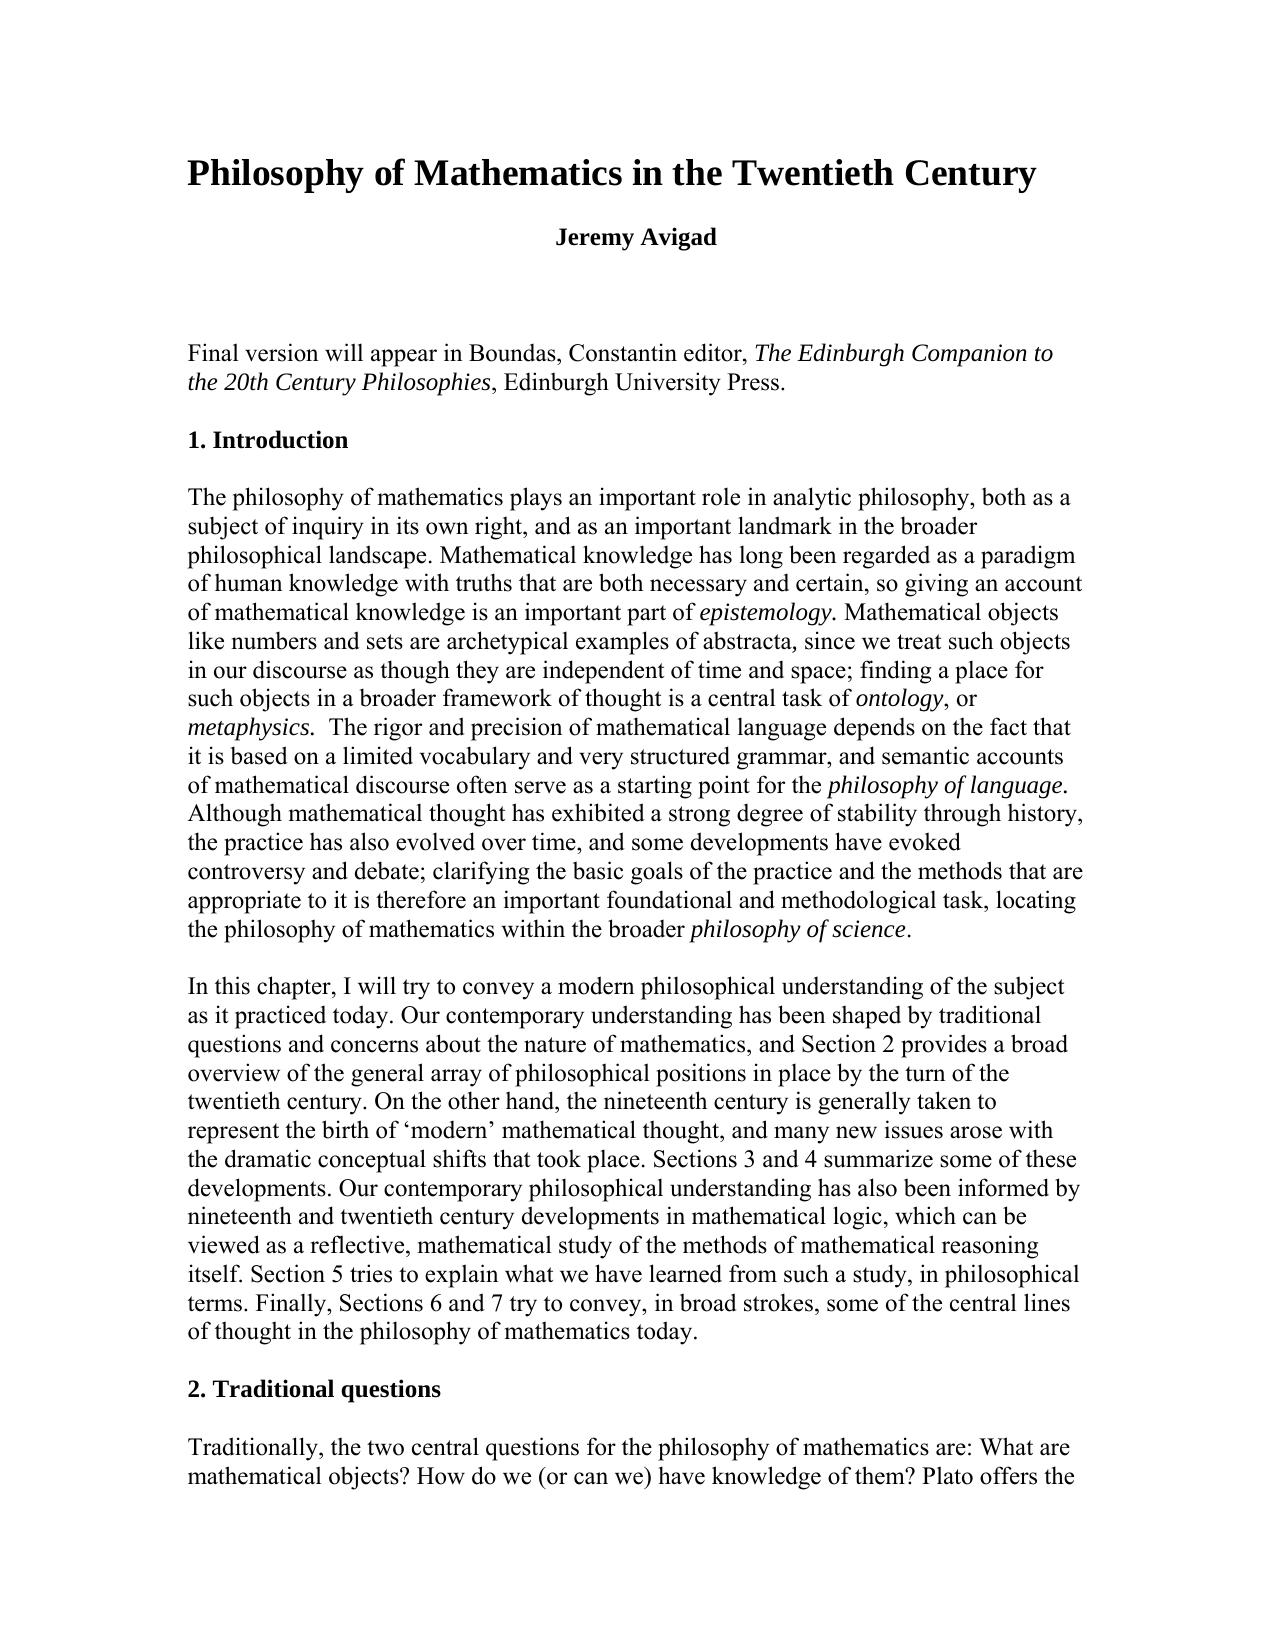 Philosophy of Mathematics in the Twentieth Century - Paper